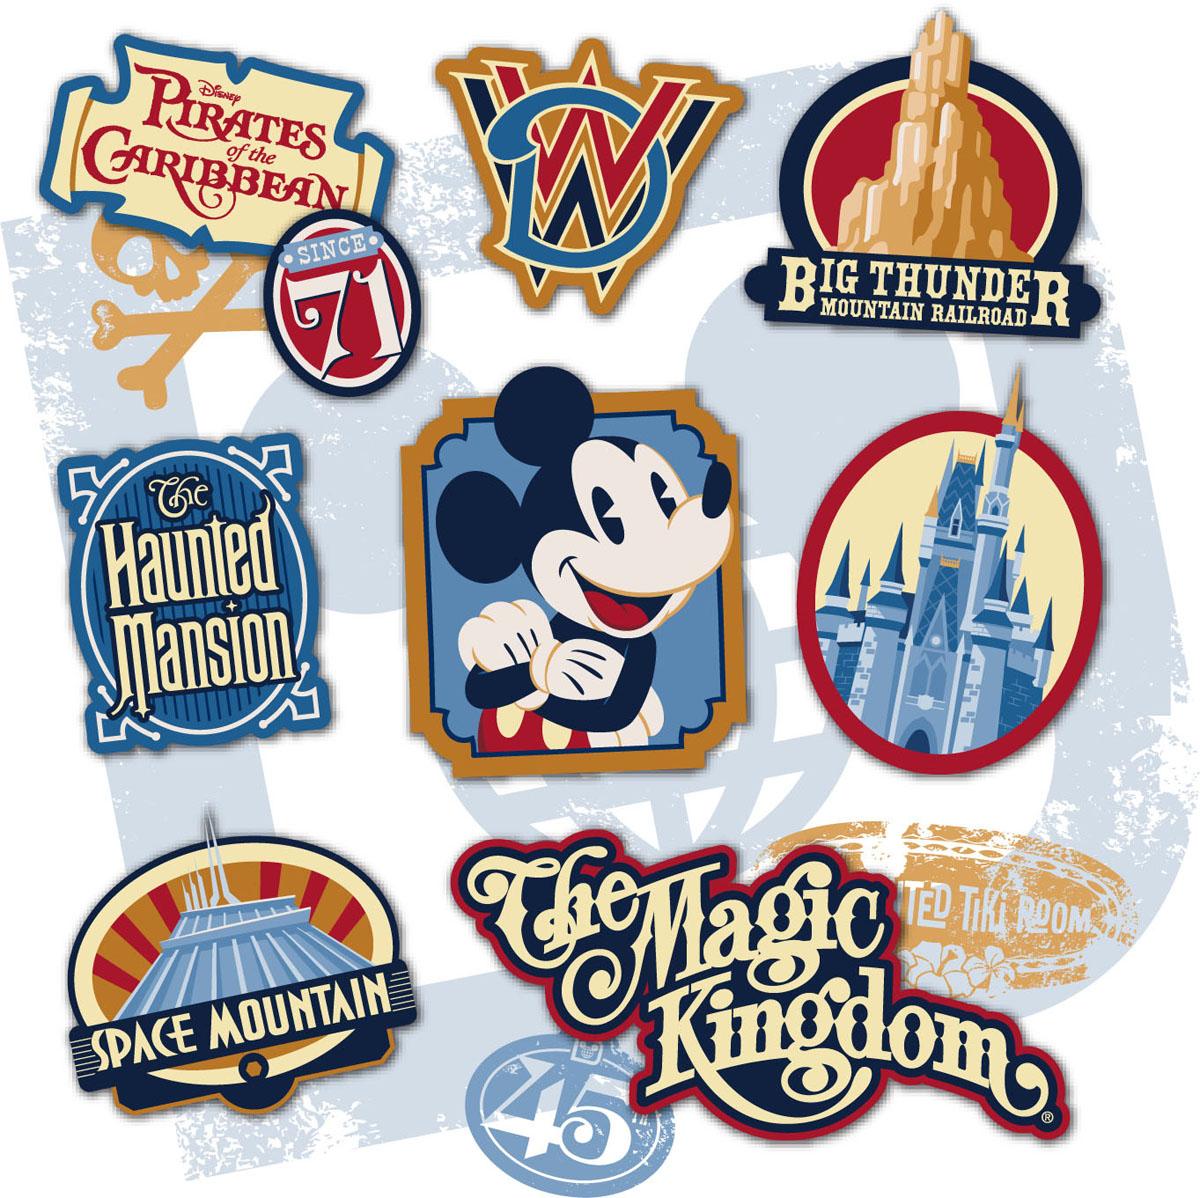 Magic Kingdom Logo - Magic Kingdom 45th Anniversary Merchandise Artwork Preview ...